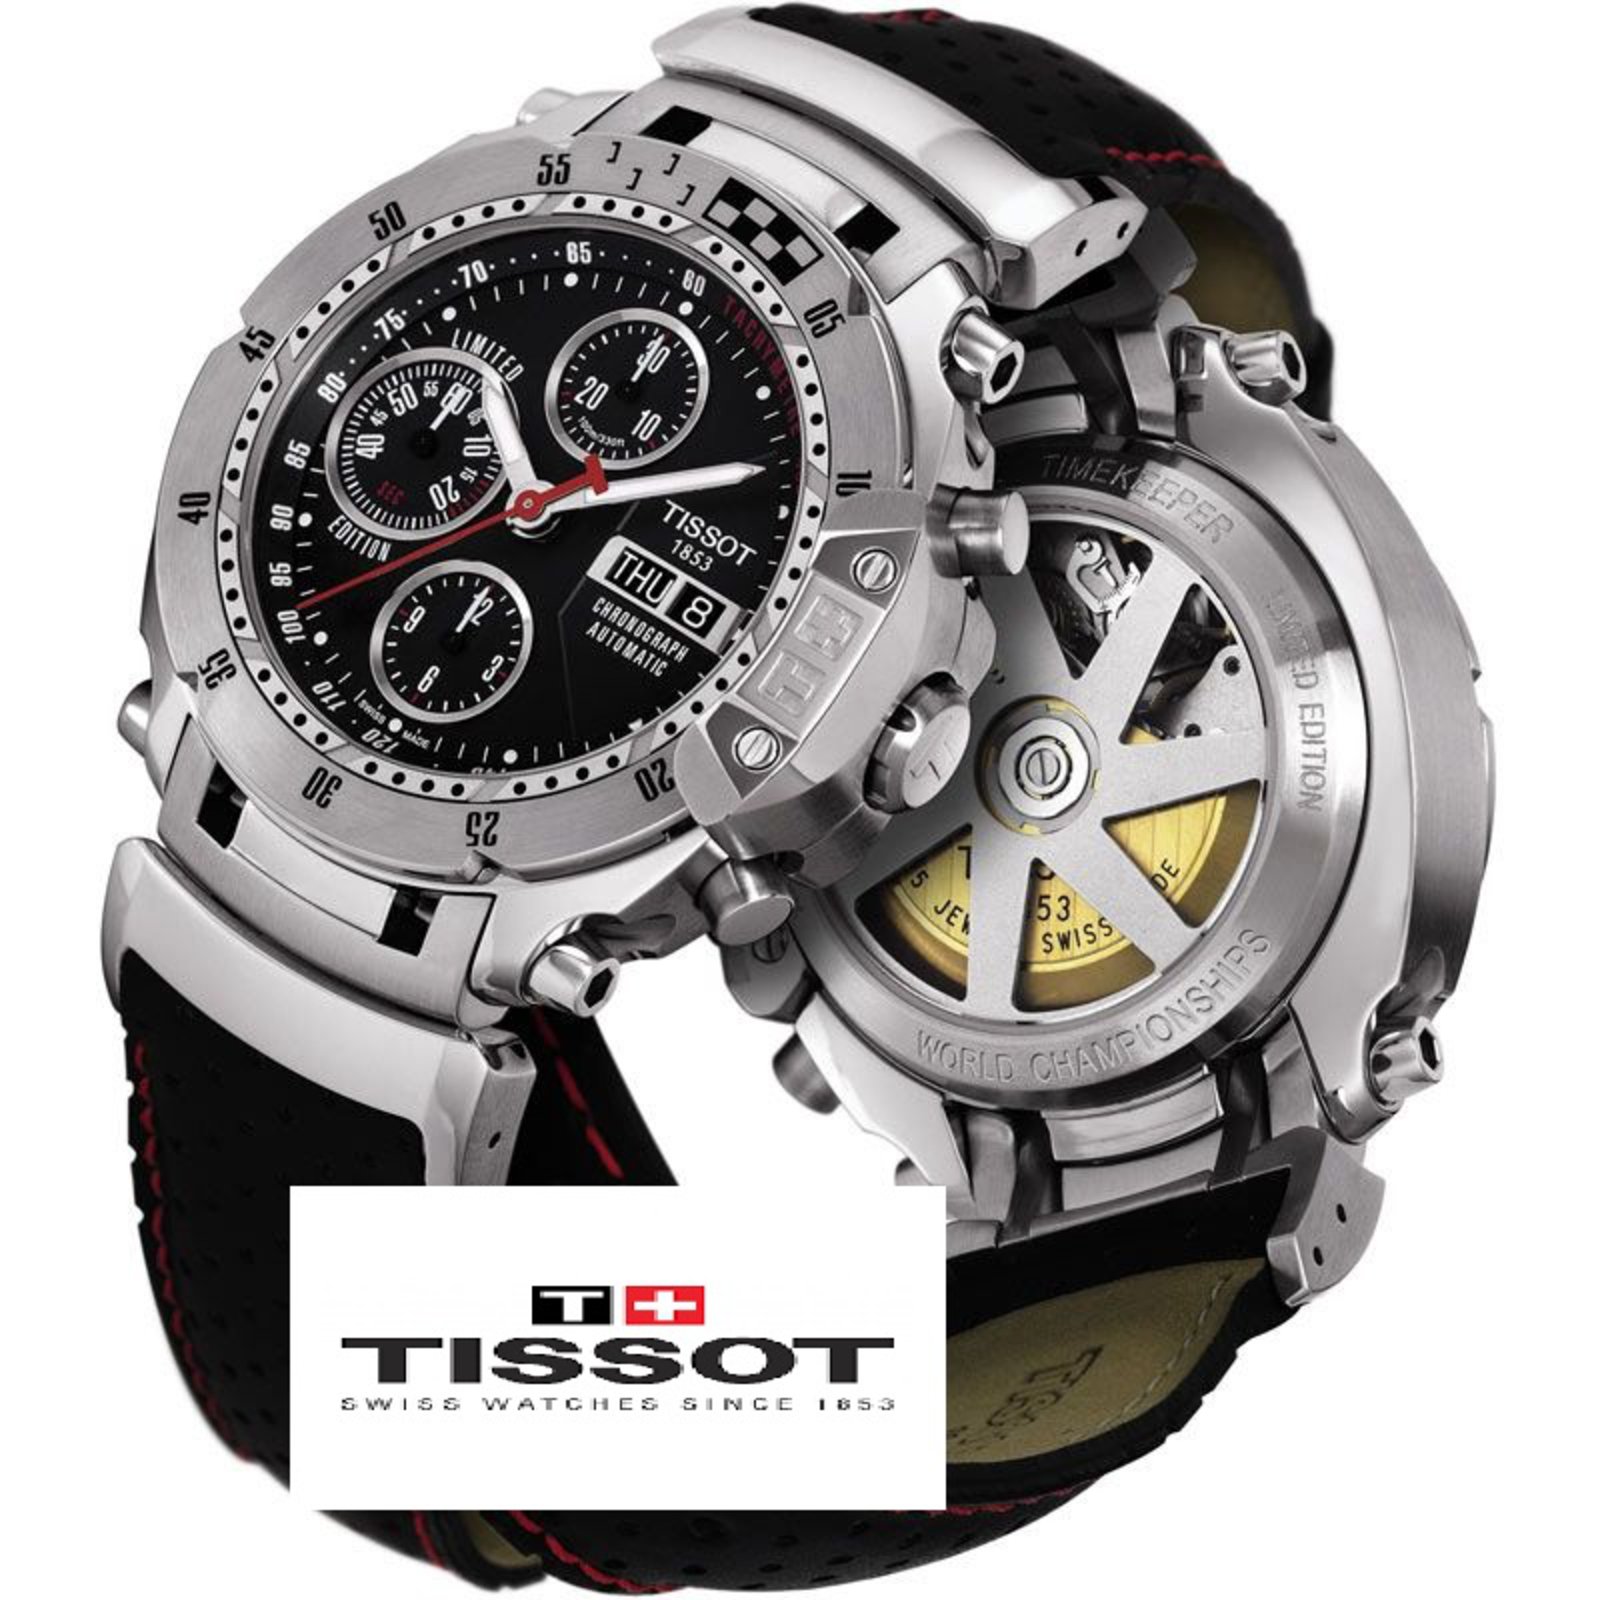 Tissot MotoGP Automatc Chronograph Limited Edition Swiss Watch very